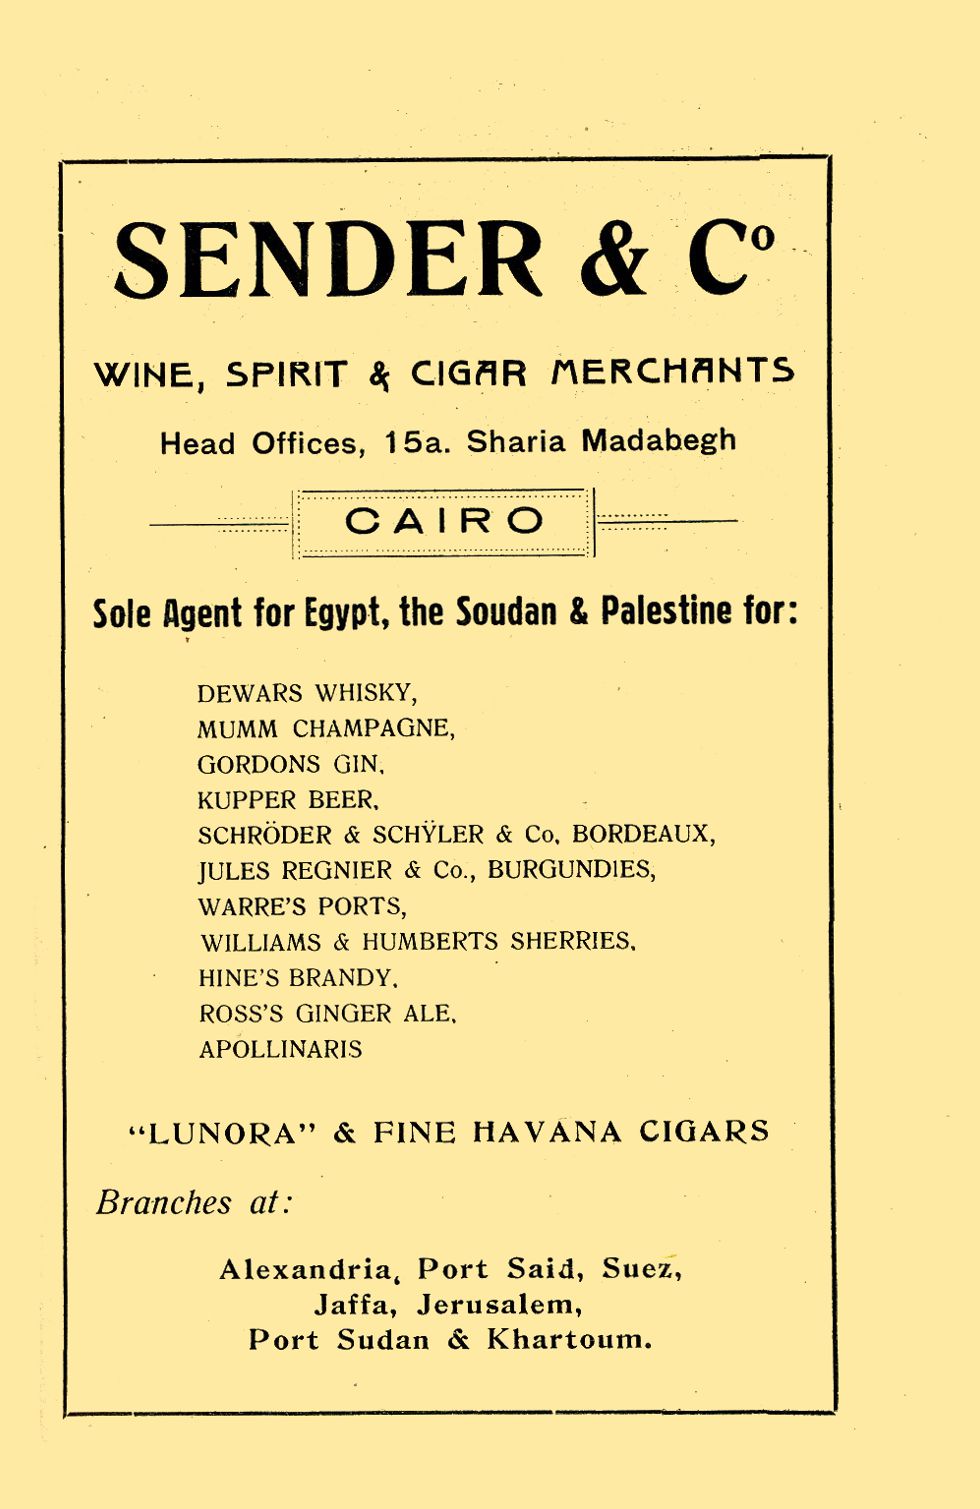 Sender & Co advertisement